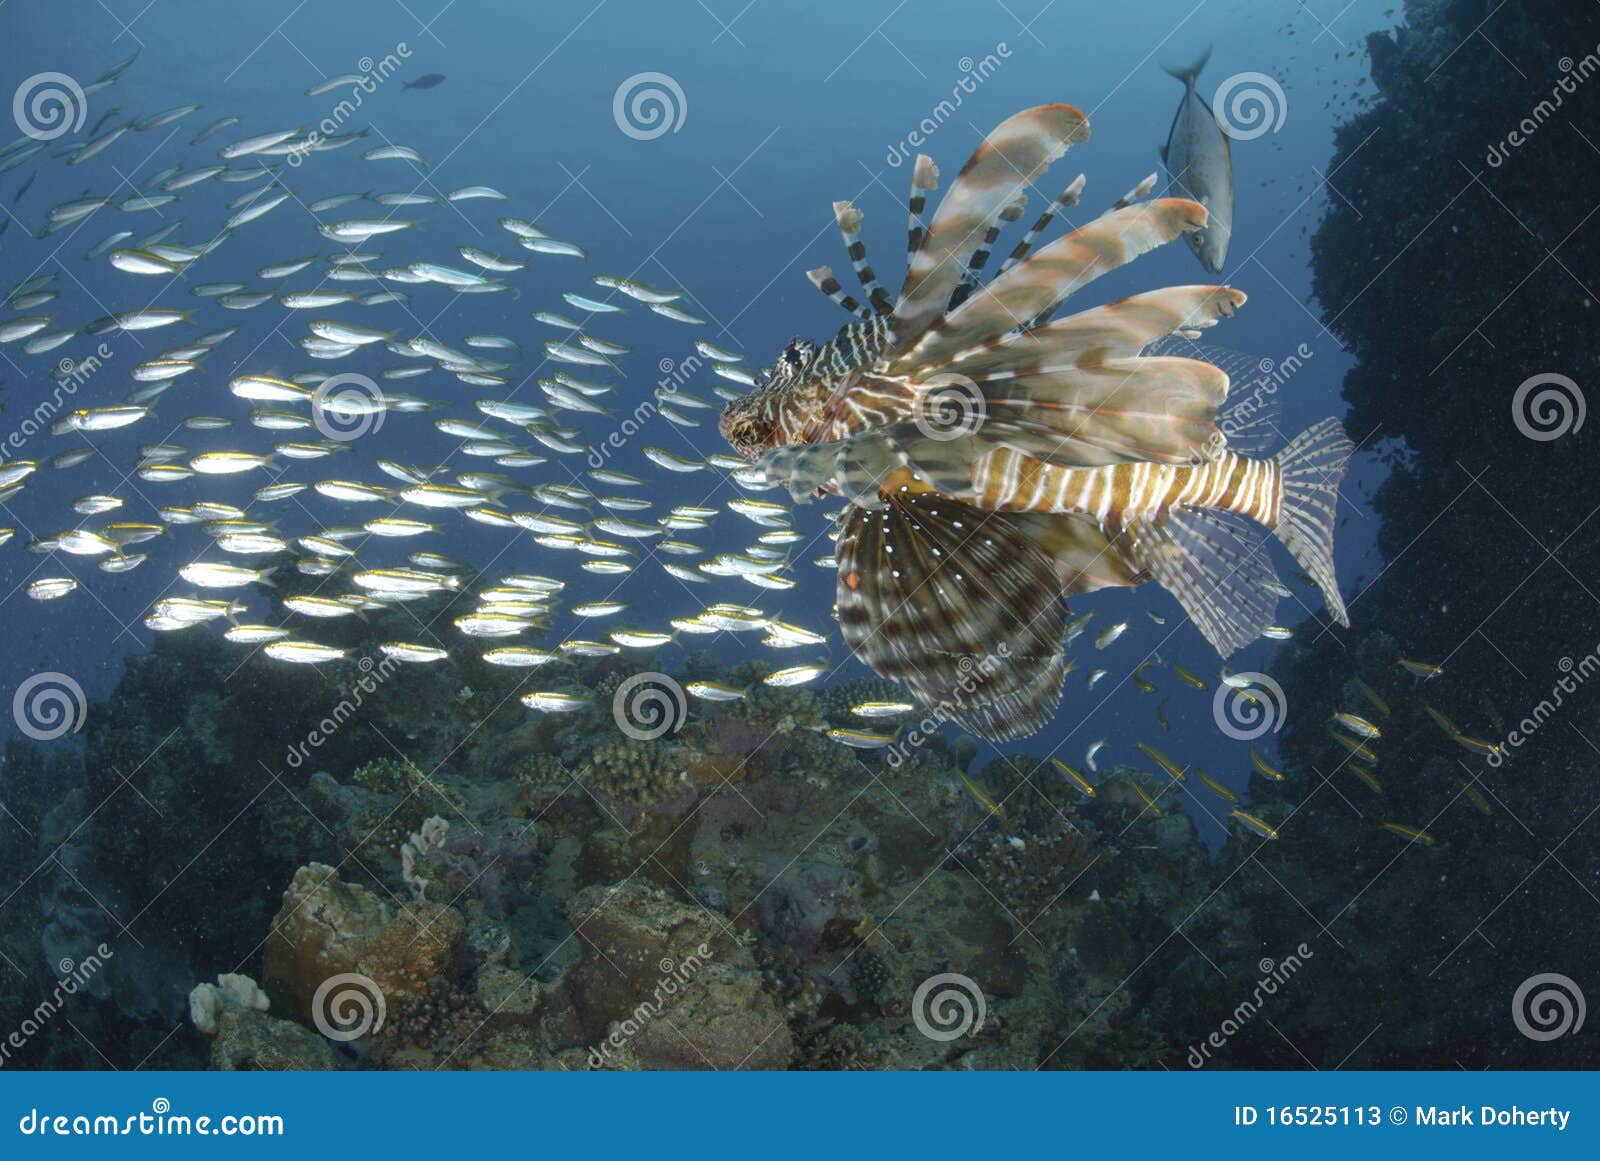 https://thumbs.dreamstime.com/z/common-lionfish-school-small-bait-fish-16525113.jpg